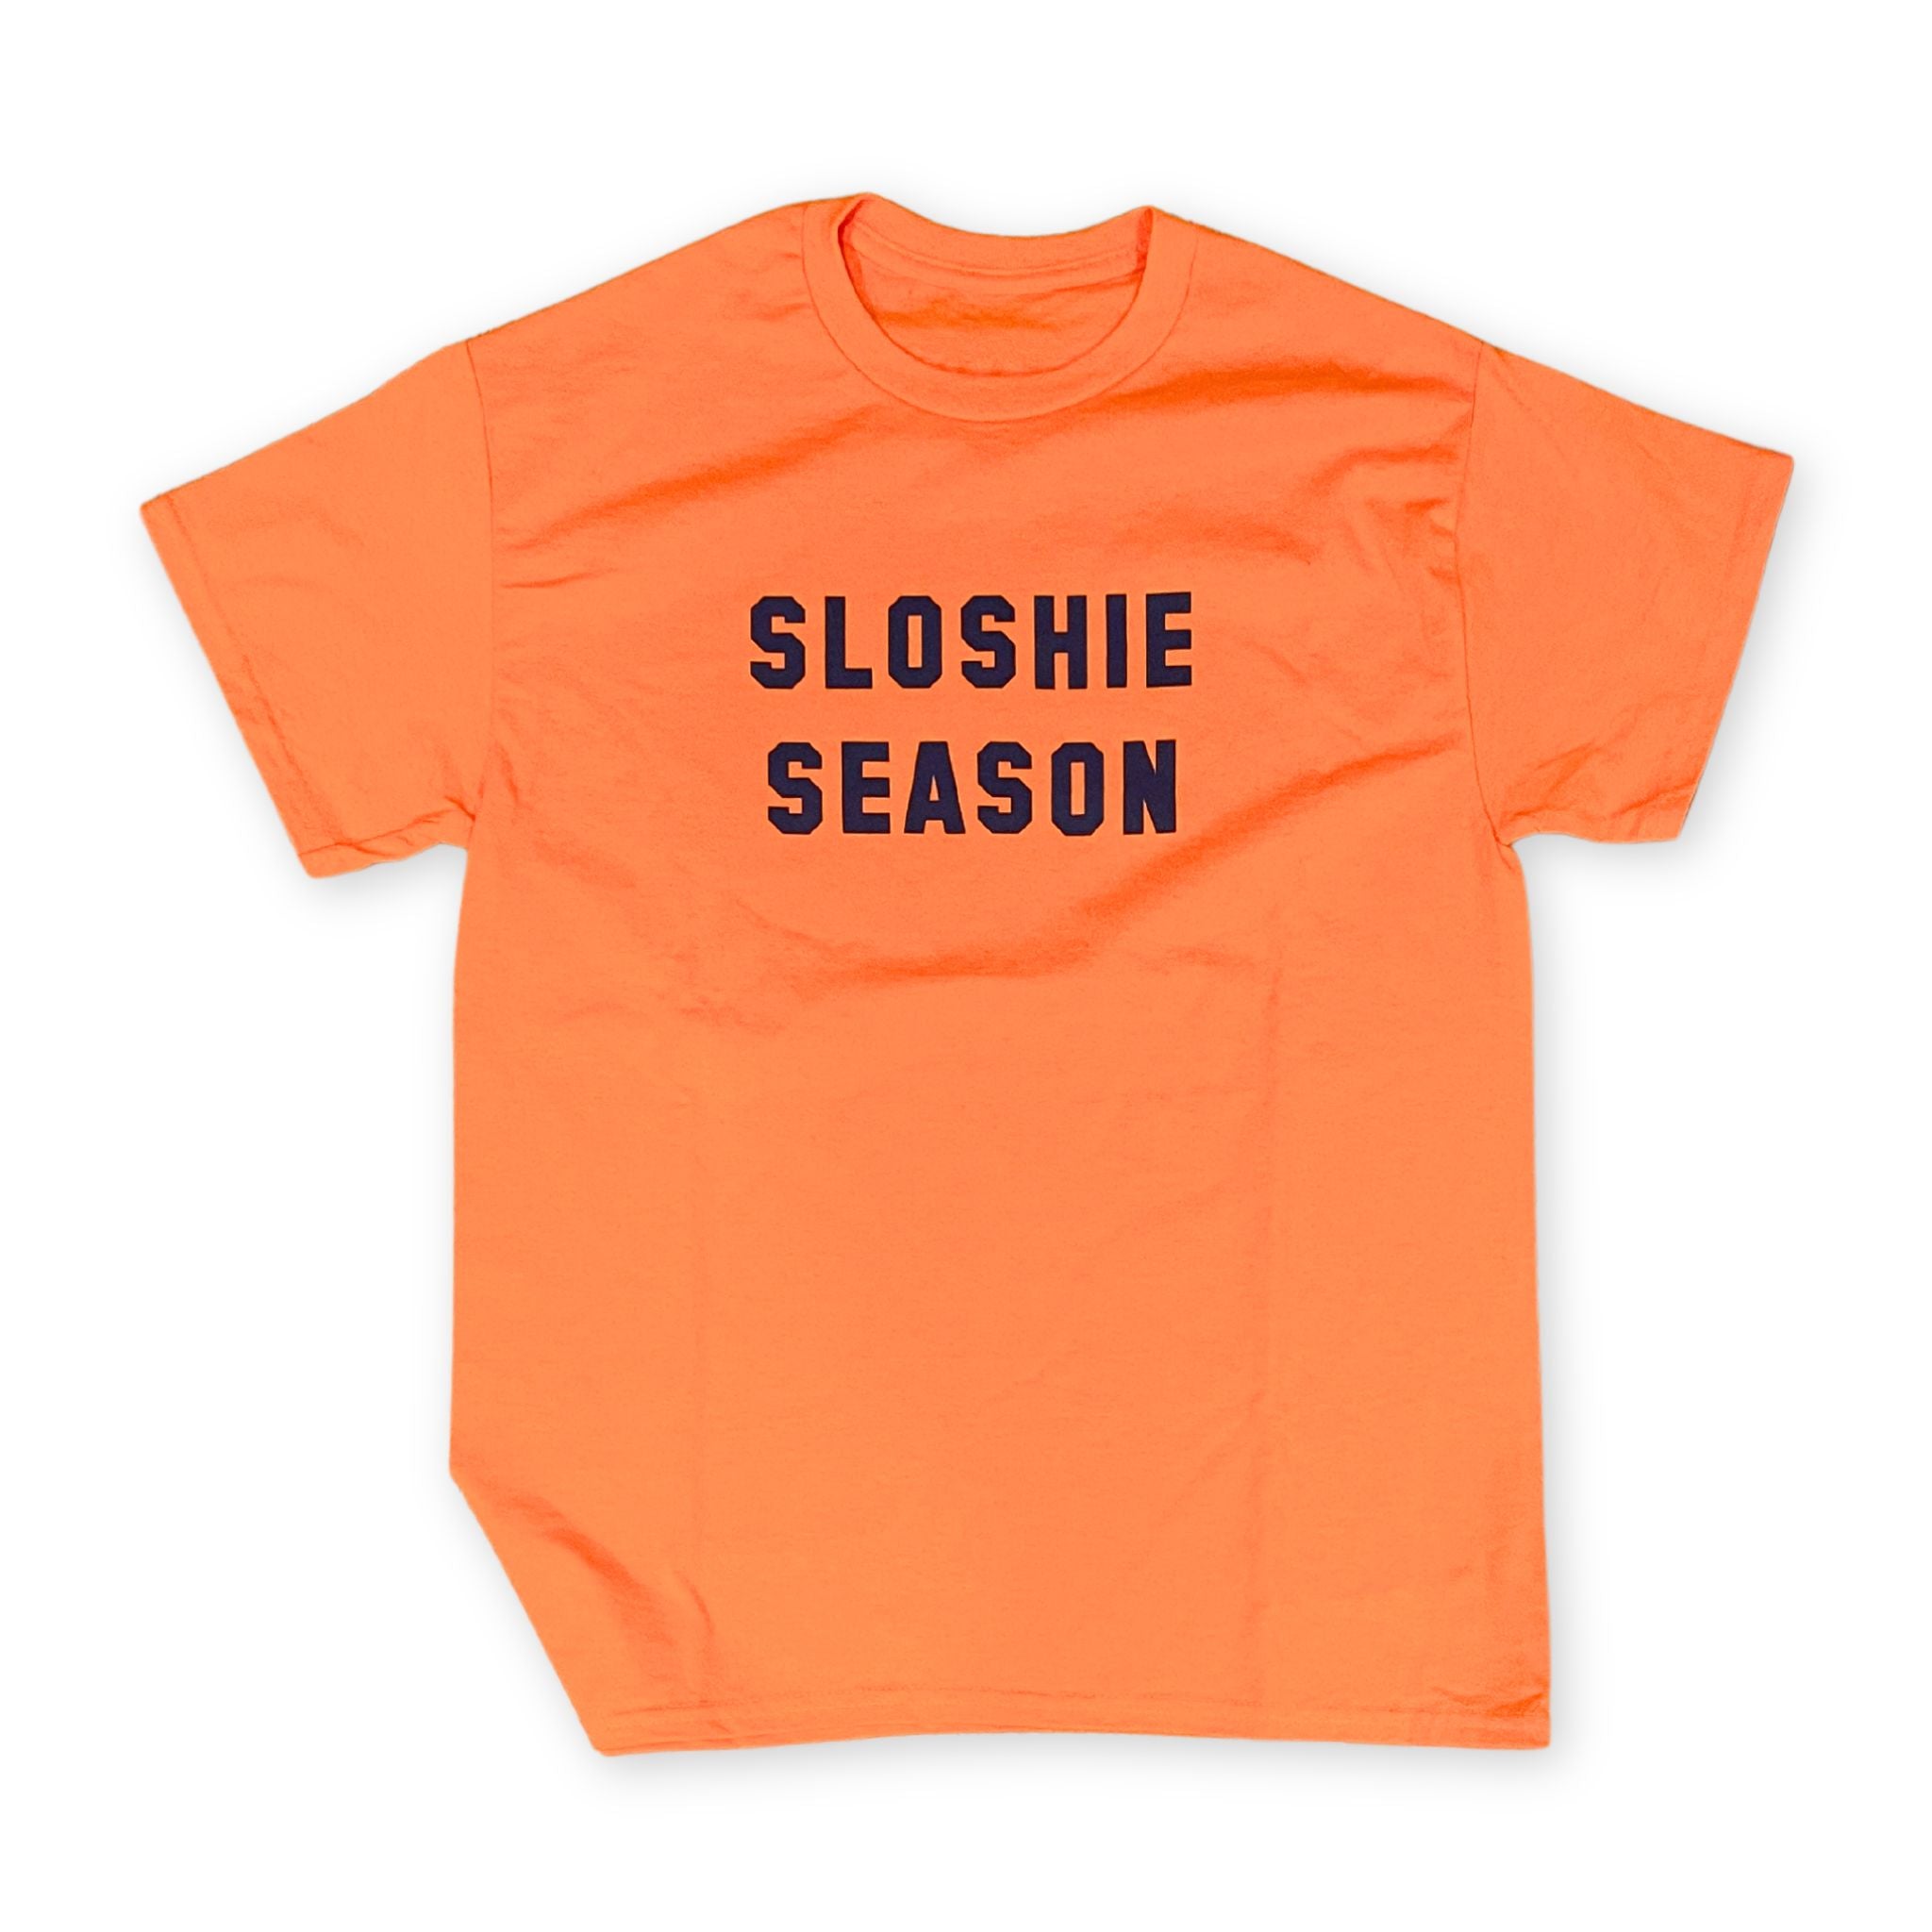 Hunter Orange Shirt with Sloshie Season printed on the front